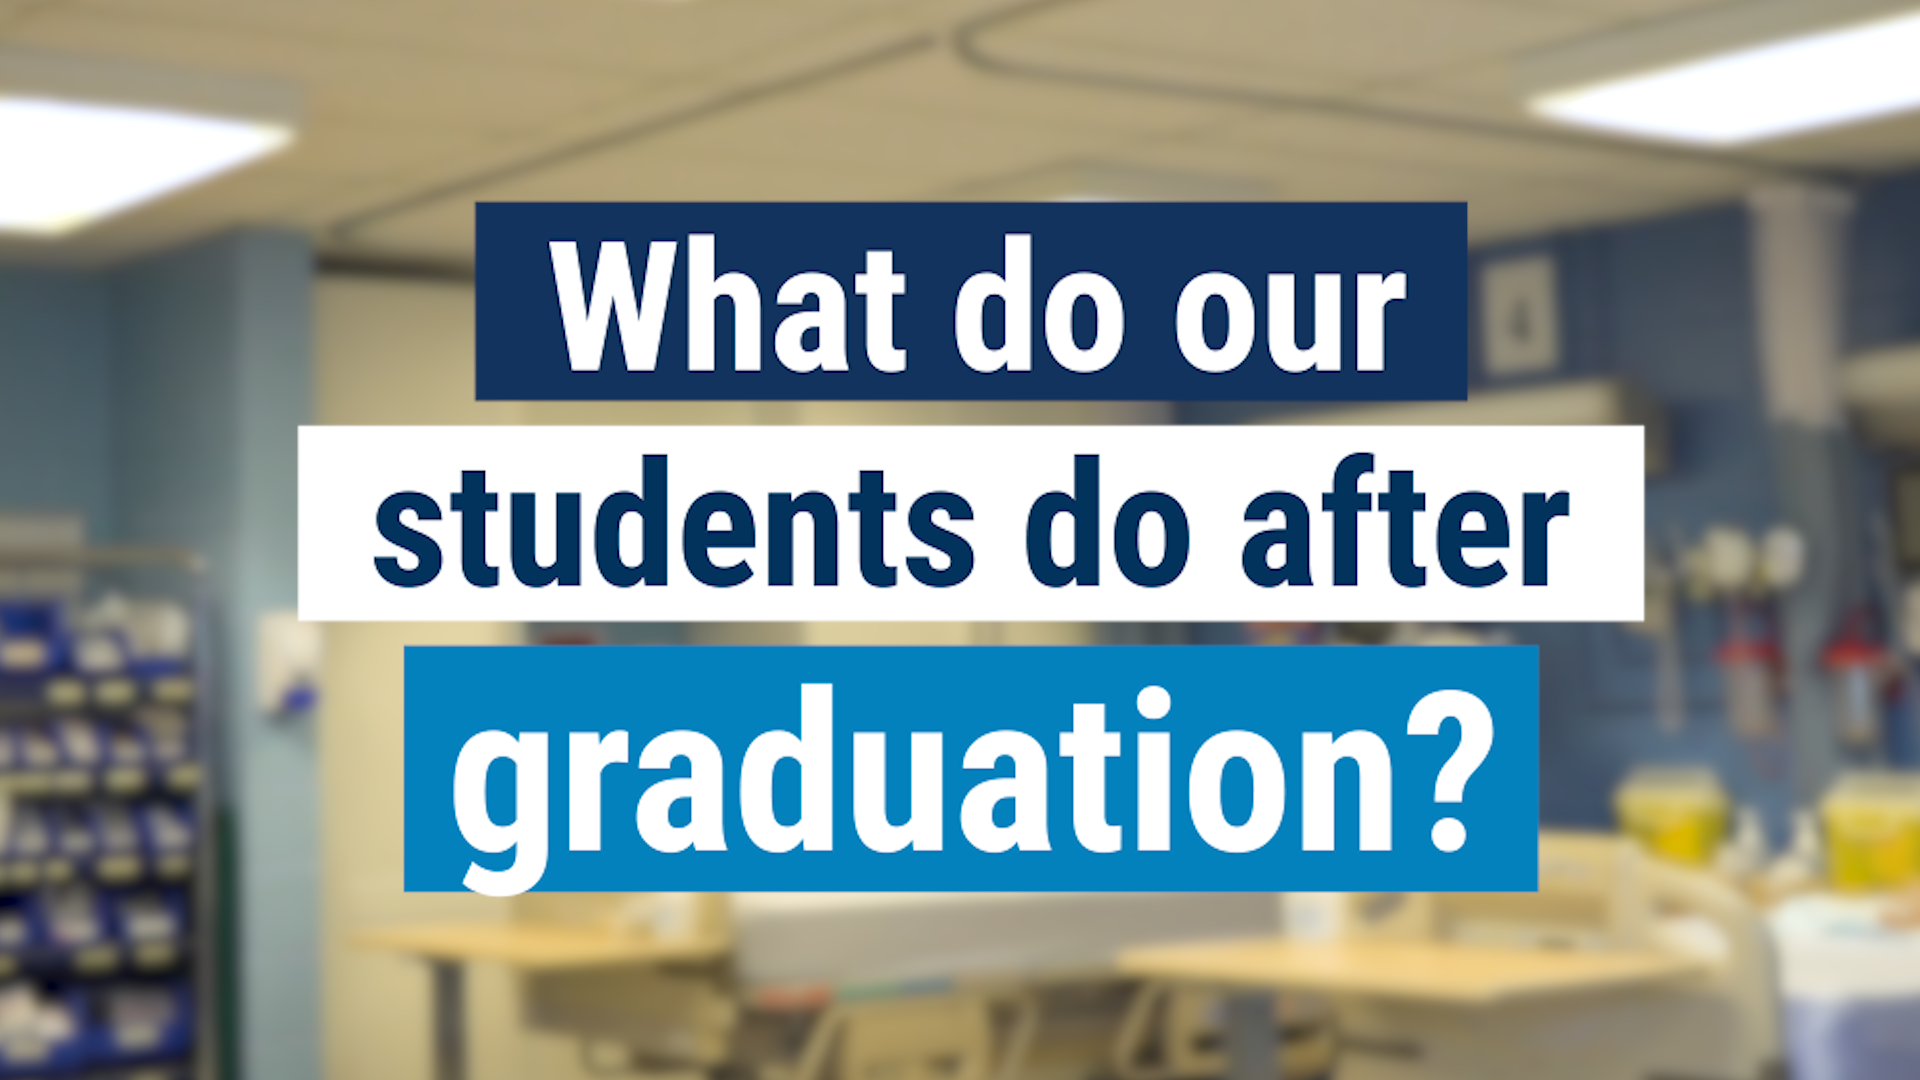 What do nursing students do after graduation?